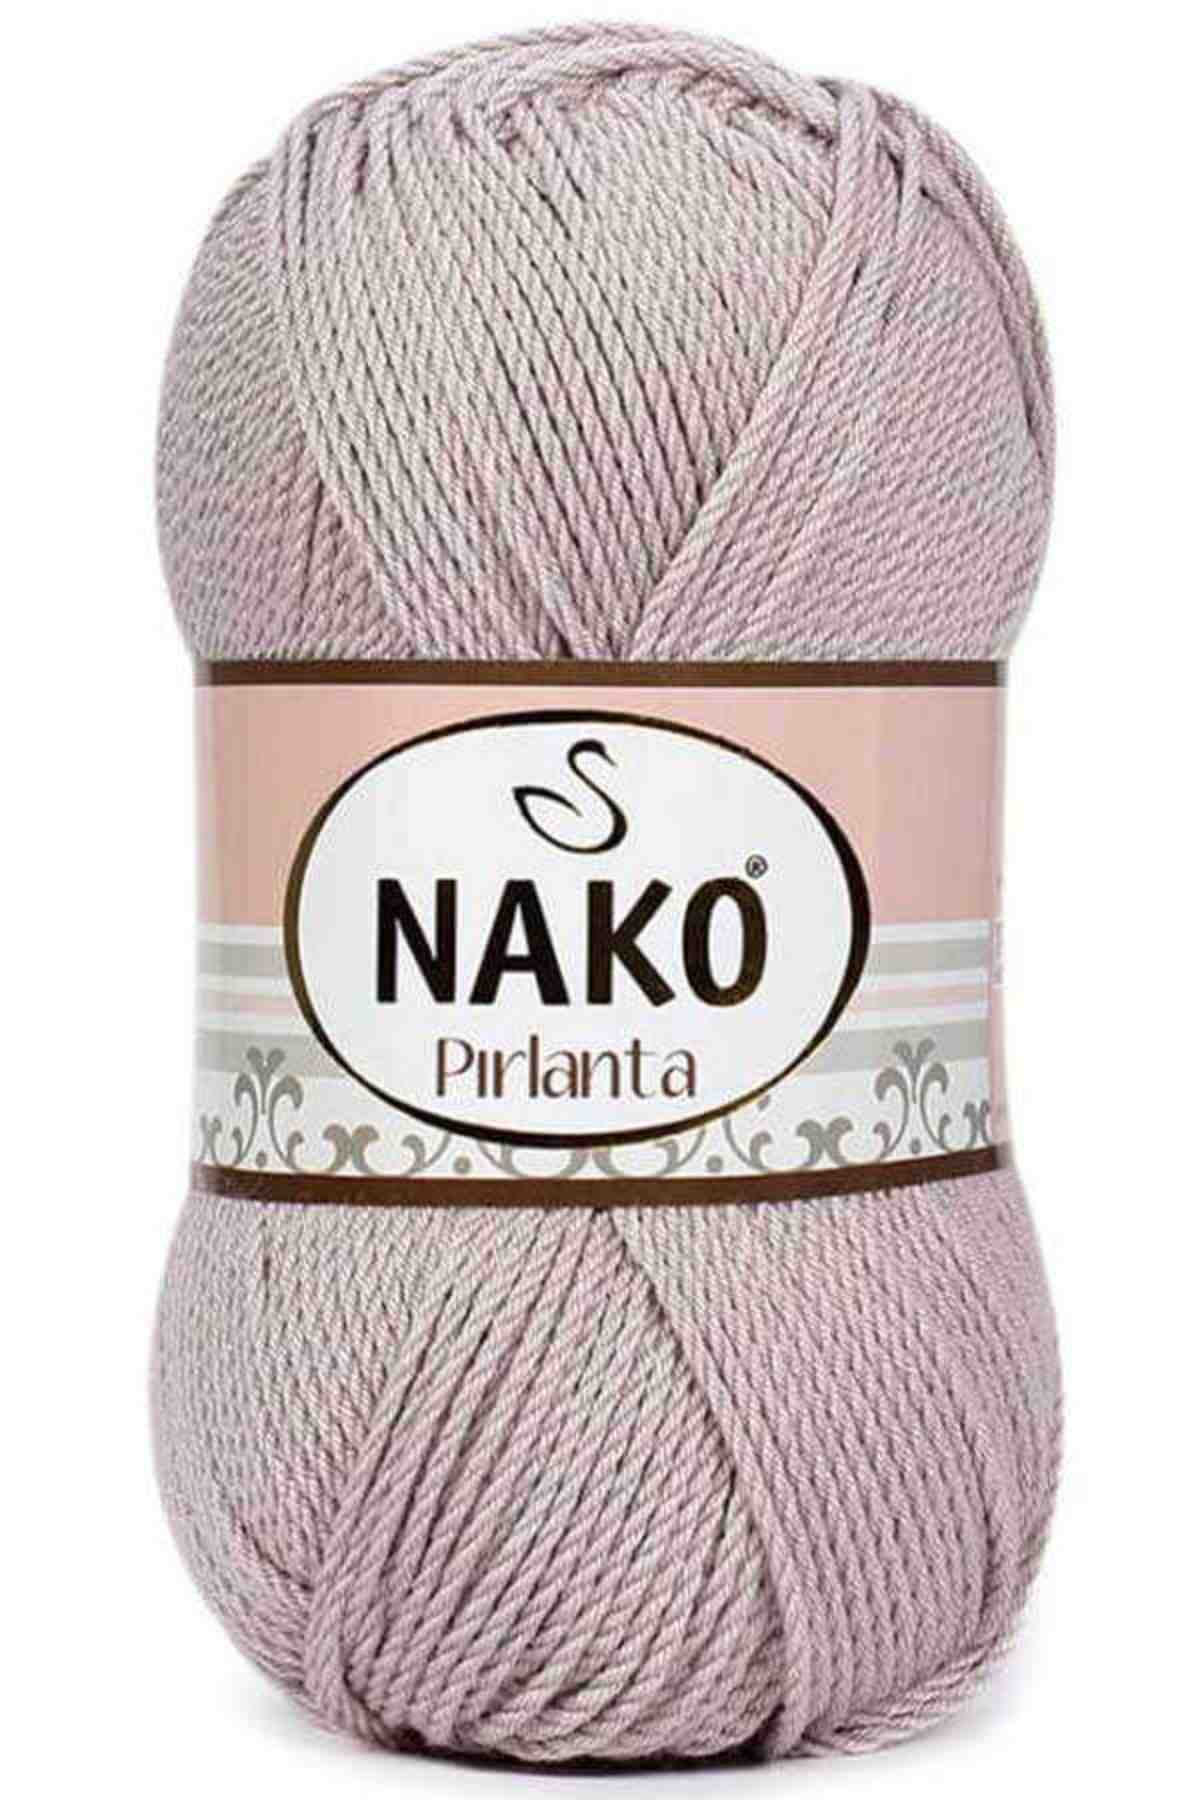 Nako Pırlanta Acrylic Yarn